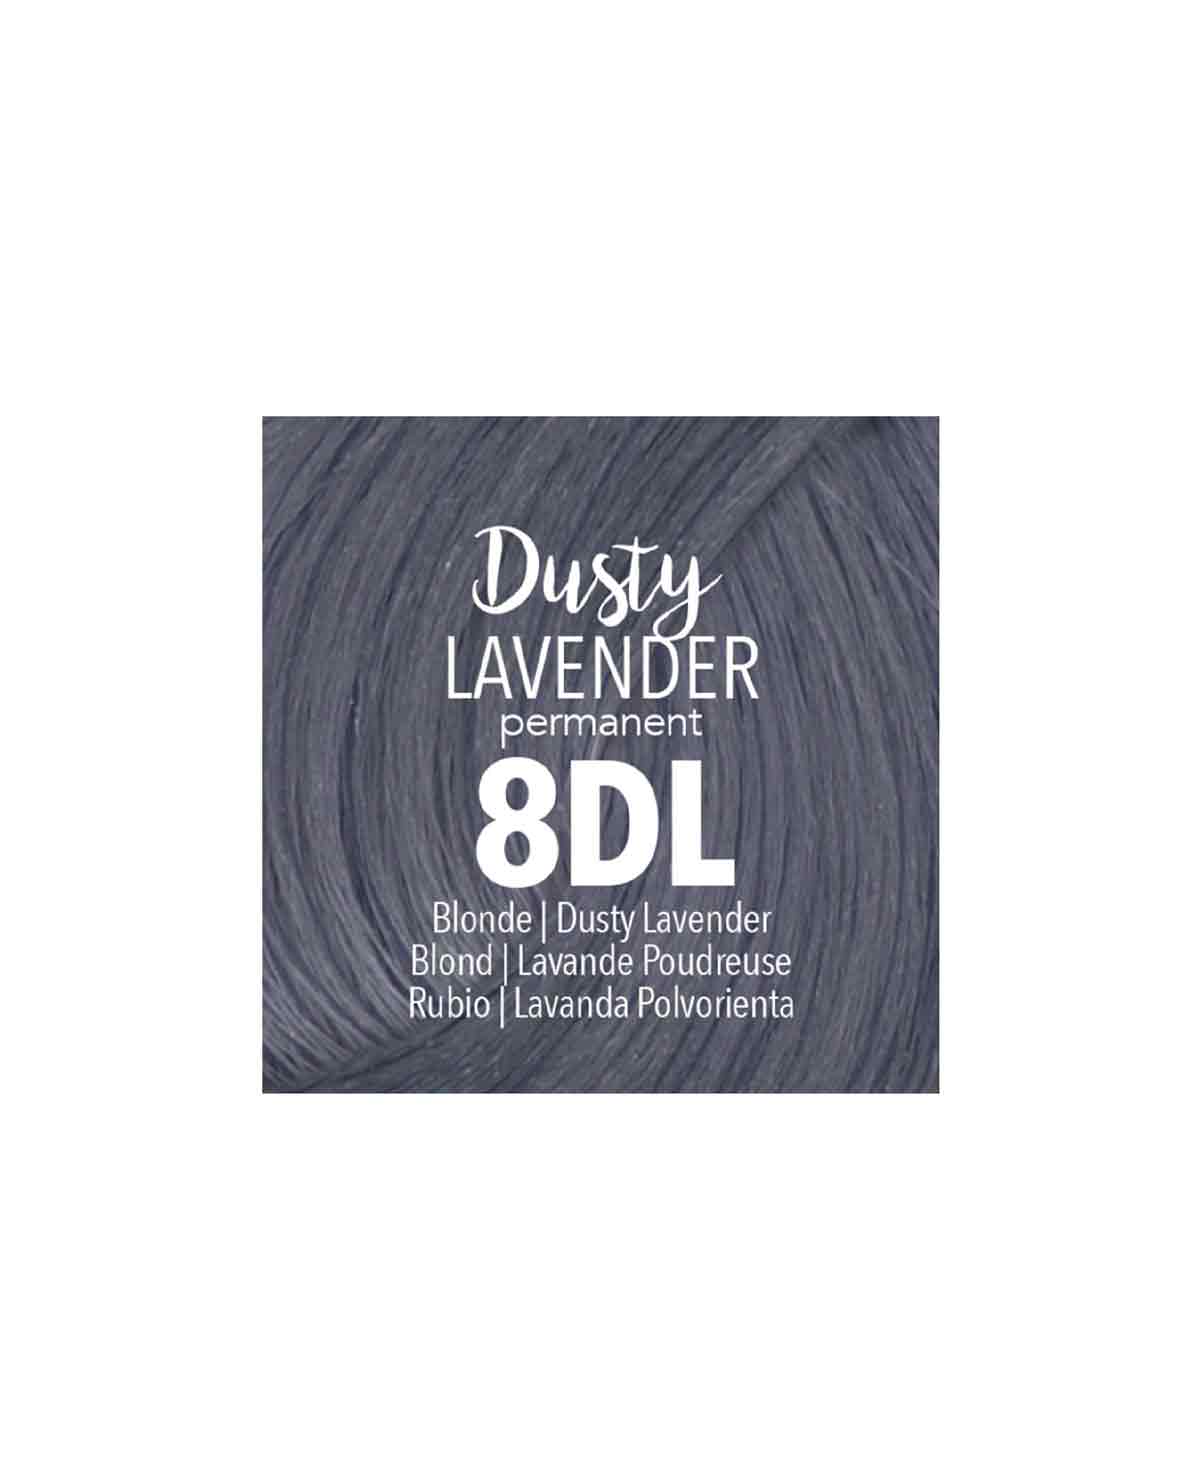 Mydentity - 8DL Blonde Dusty Lavender